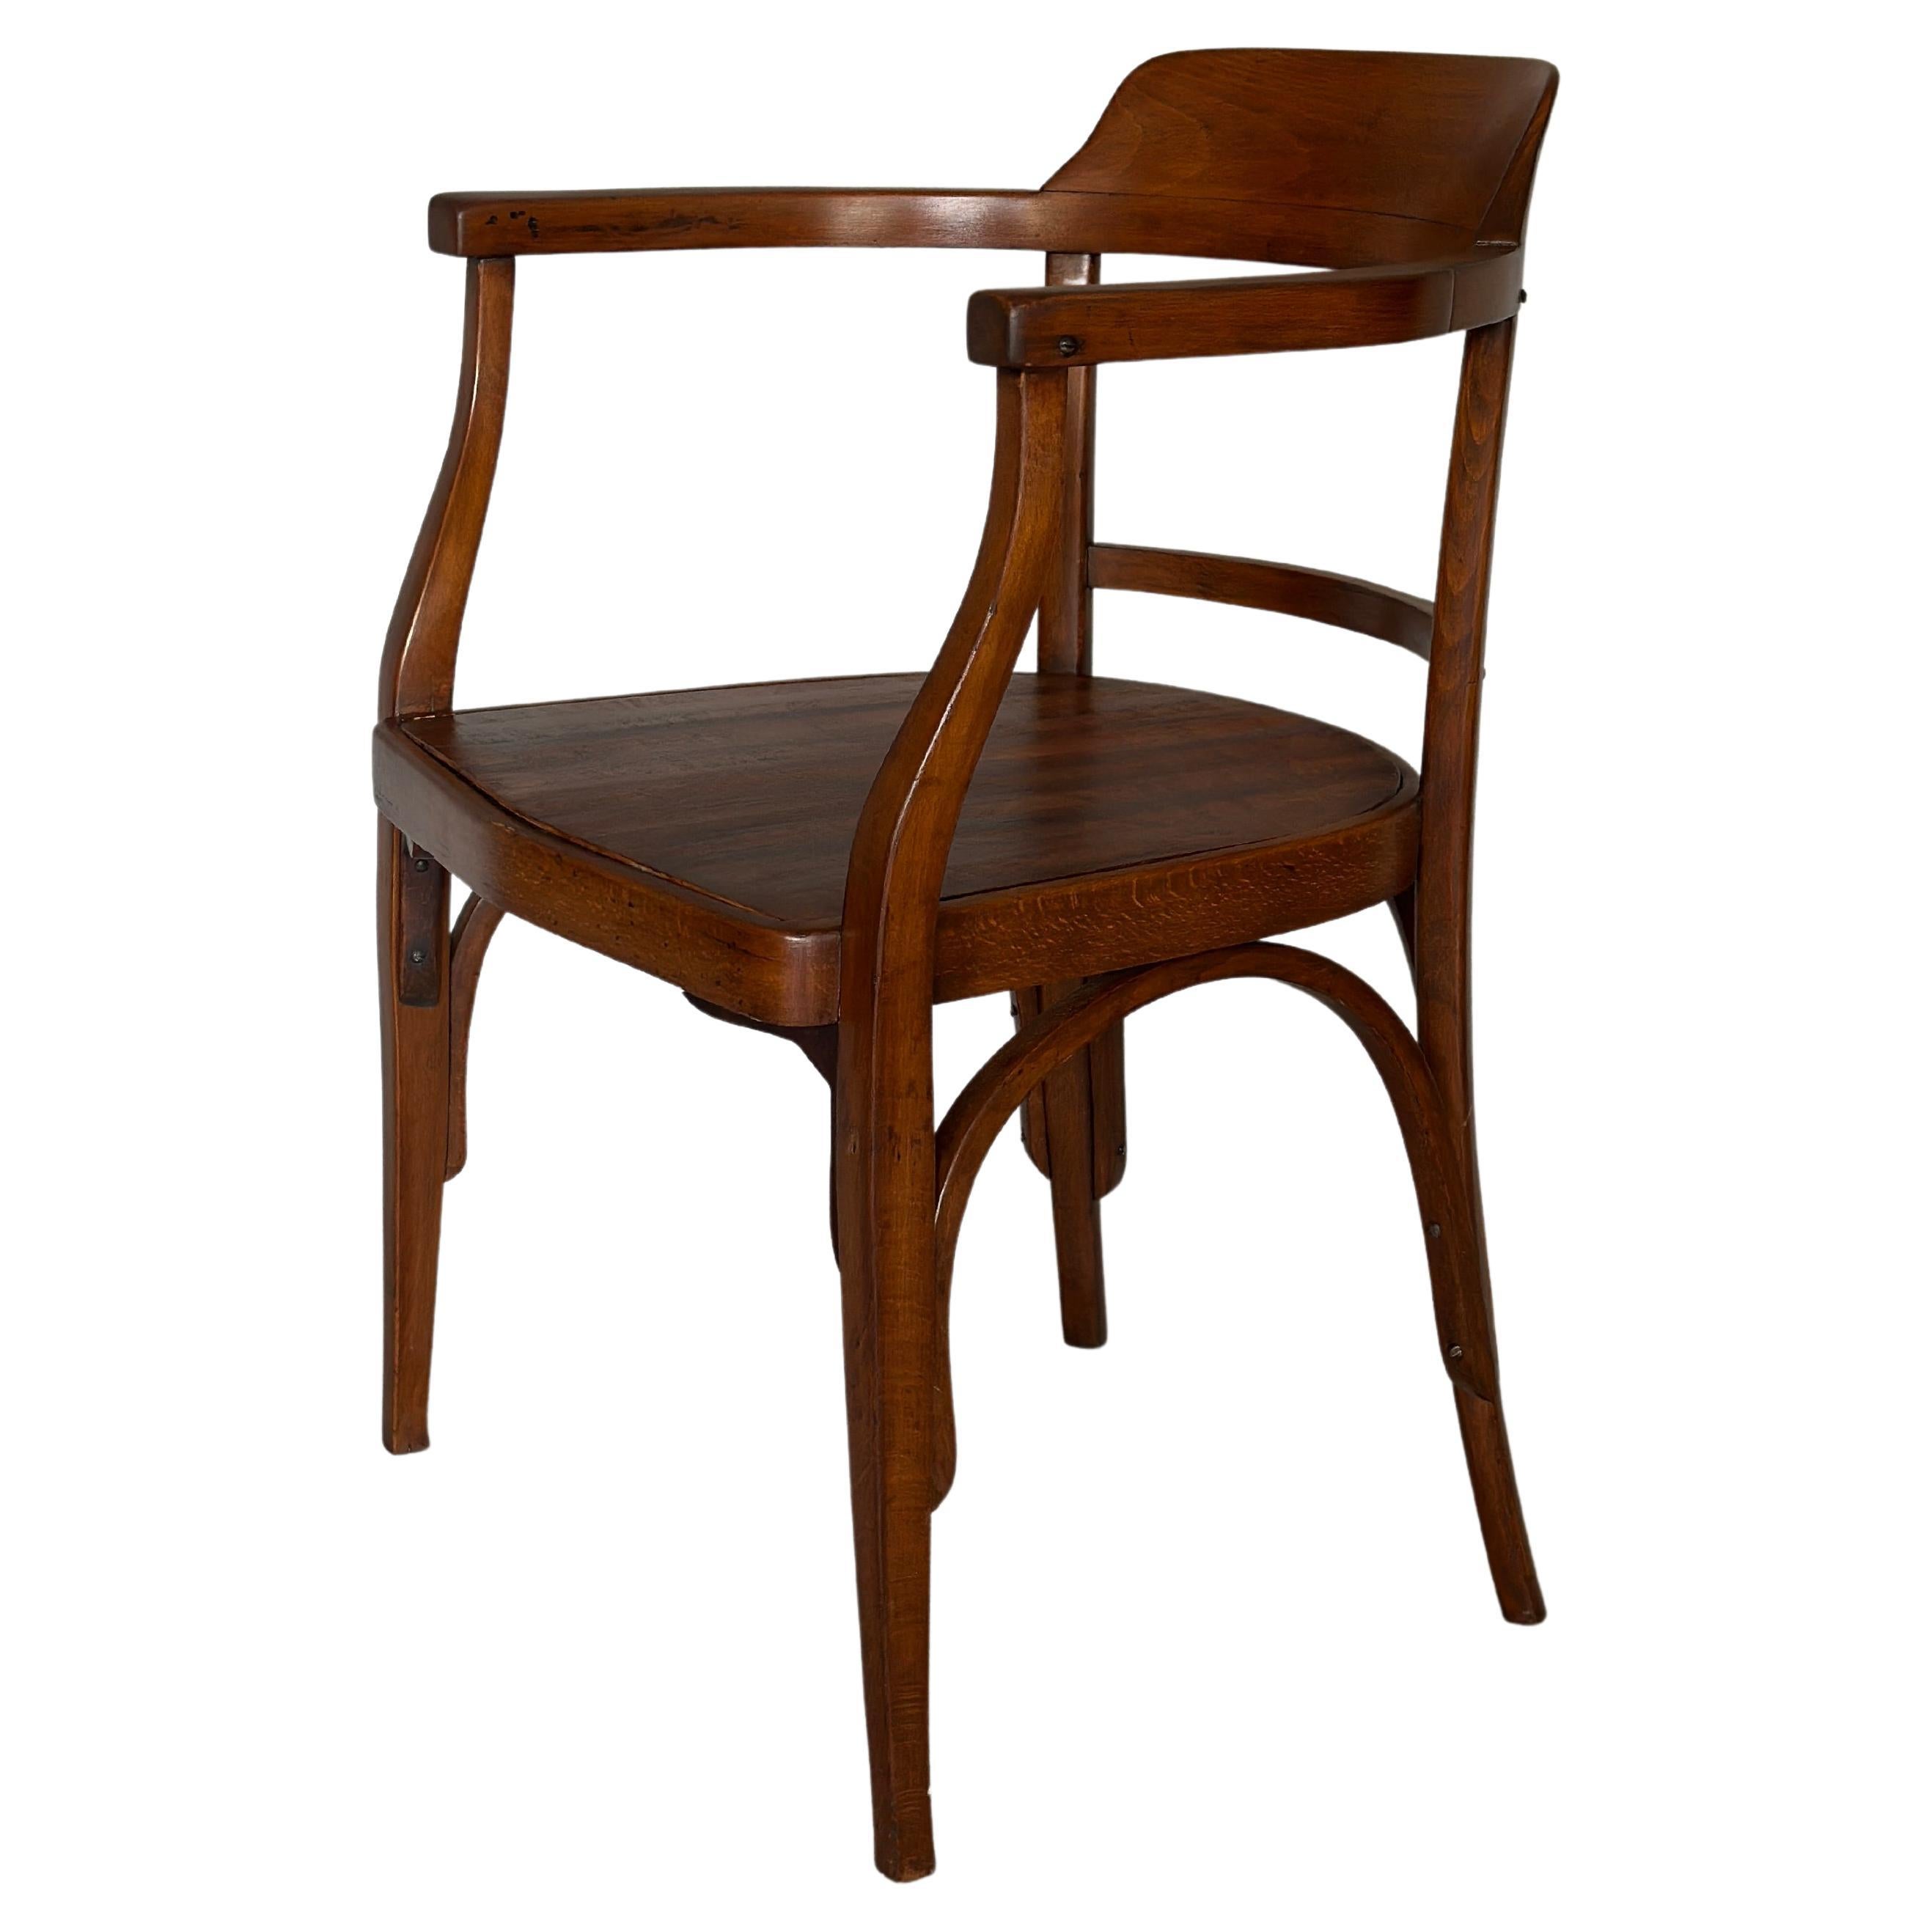 J & J Kohn-Stuhl 714 von Otto Wagner, 1920er Jahre